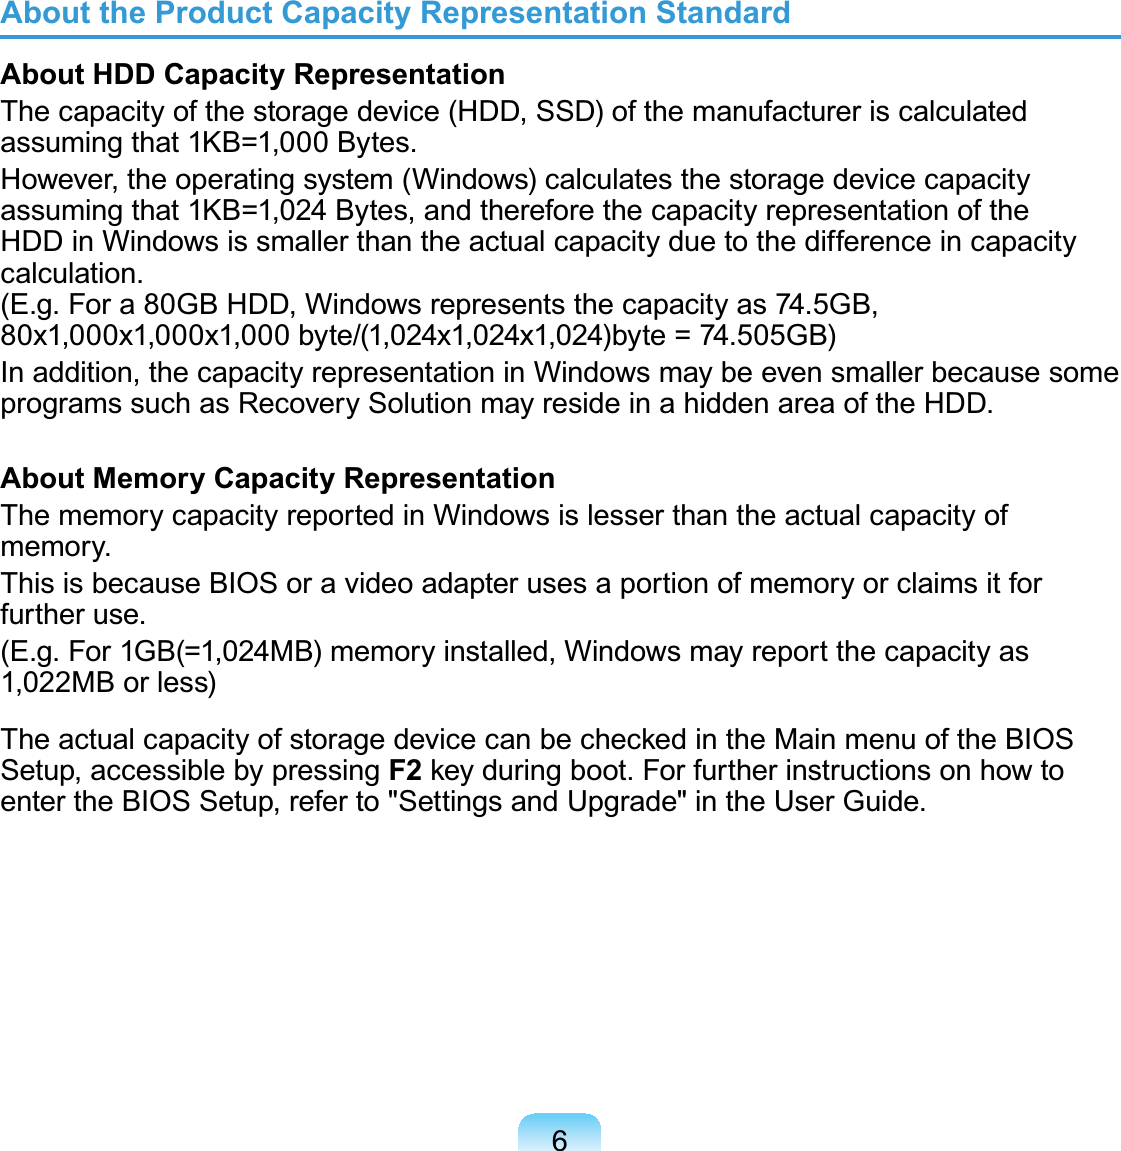 6About the Product Capacity Representation StandardAbout HDD Capacity RepresentationThecapacityofthestoragedevice(HDD,SSD)ofthemanufactureriscalculatedassuming that 1KB=1,000 Bytes.However,theoperatingsystem(Windows)calculatesthestoragedevicecapacityassumingthat1KB=1,024 Bytes,andthereforethecapacityrepresentationoftheHDDinWindowsissmallerthantheactualcapacityduetothedifferenceincapacitycalculation.(E.g.Fora80GBHDD,Windowsrepresentsthecapacityas74.5GB,80x1,000x1,000x1,000 byte/(1,024x1,024x1,024)byte = 74.505GB)Inaddition,thecapacityrepresentationinWindowsmaybeevensmallerbecausesomeprogramssuchasRecoverySolutionmayresideinahiddenareaoftheHDD.About Memory Capacity RepresentationThememorycapacityreportedinWindowsislesserthantheactualcapacityofmemory.ThisisbecauseBIOSoravideoadapterusesaportionofmemoryorclaimsitforfurther use.(E.g.For1GB(=1,024MB)memoryinstalled,Windowsmayreportthecapacityas1,022MBorless)7KHDFWXDOFDSDFLW\RIVWRUDJHGHYLFHFDQEHFKHFNHGLQWKH0DLQPHQXRIWKH%,26Setup, accessible by pressing F2NH\GXULQJERRW)RUIXUWKHULQVWUXFWLRQVRQKRZWRentertheBIOSSetup,referto&quot;SettingsandUpgrade&quot;intheUserGuide.